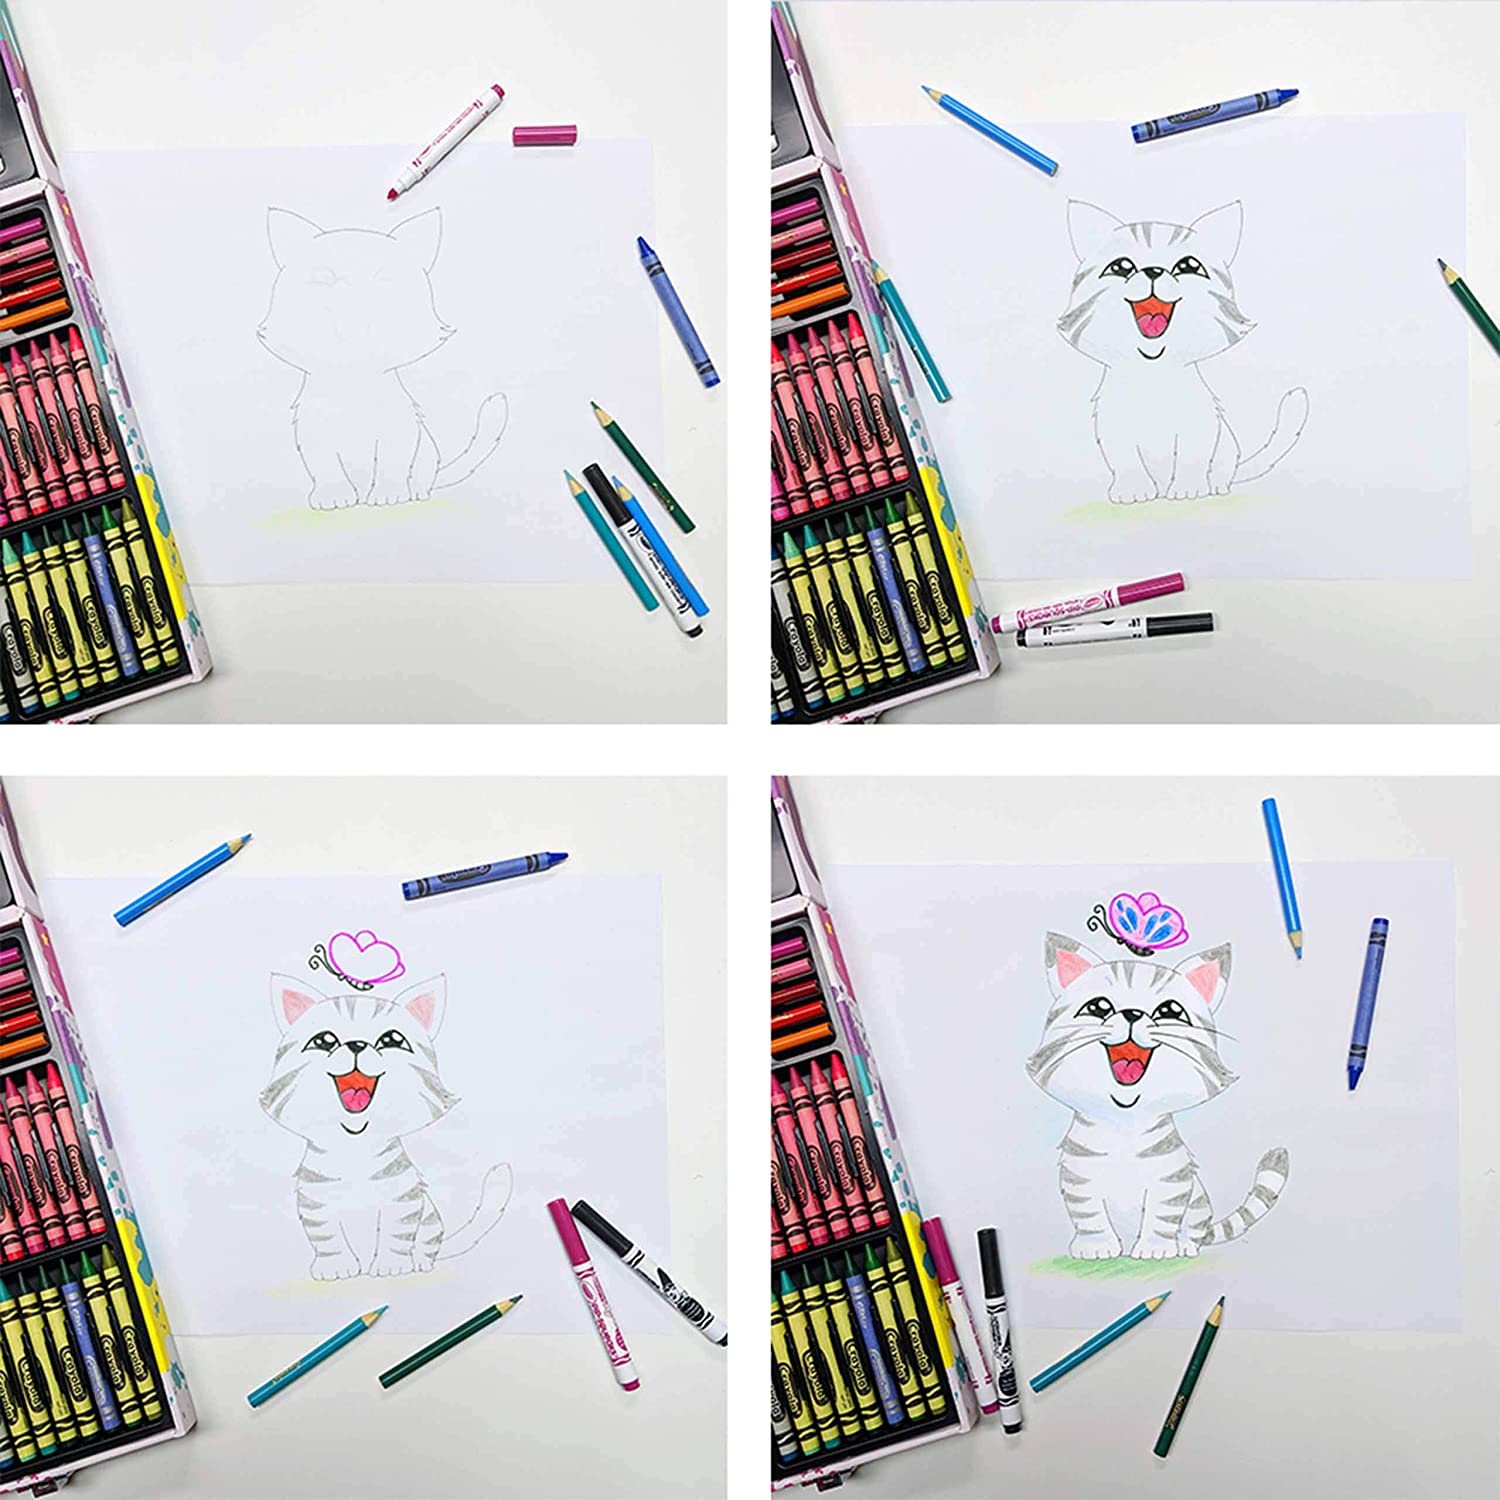 Inspiration Art Case Coloring Set, Gift for Kids, 140 Art Supplies 